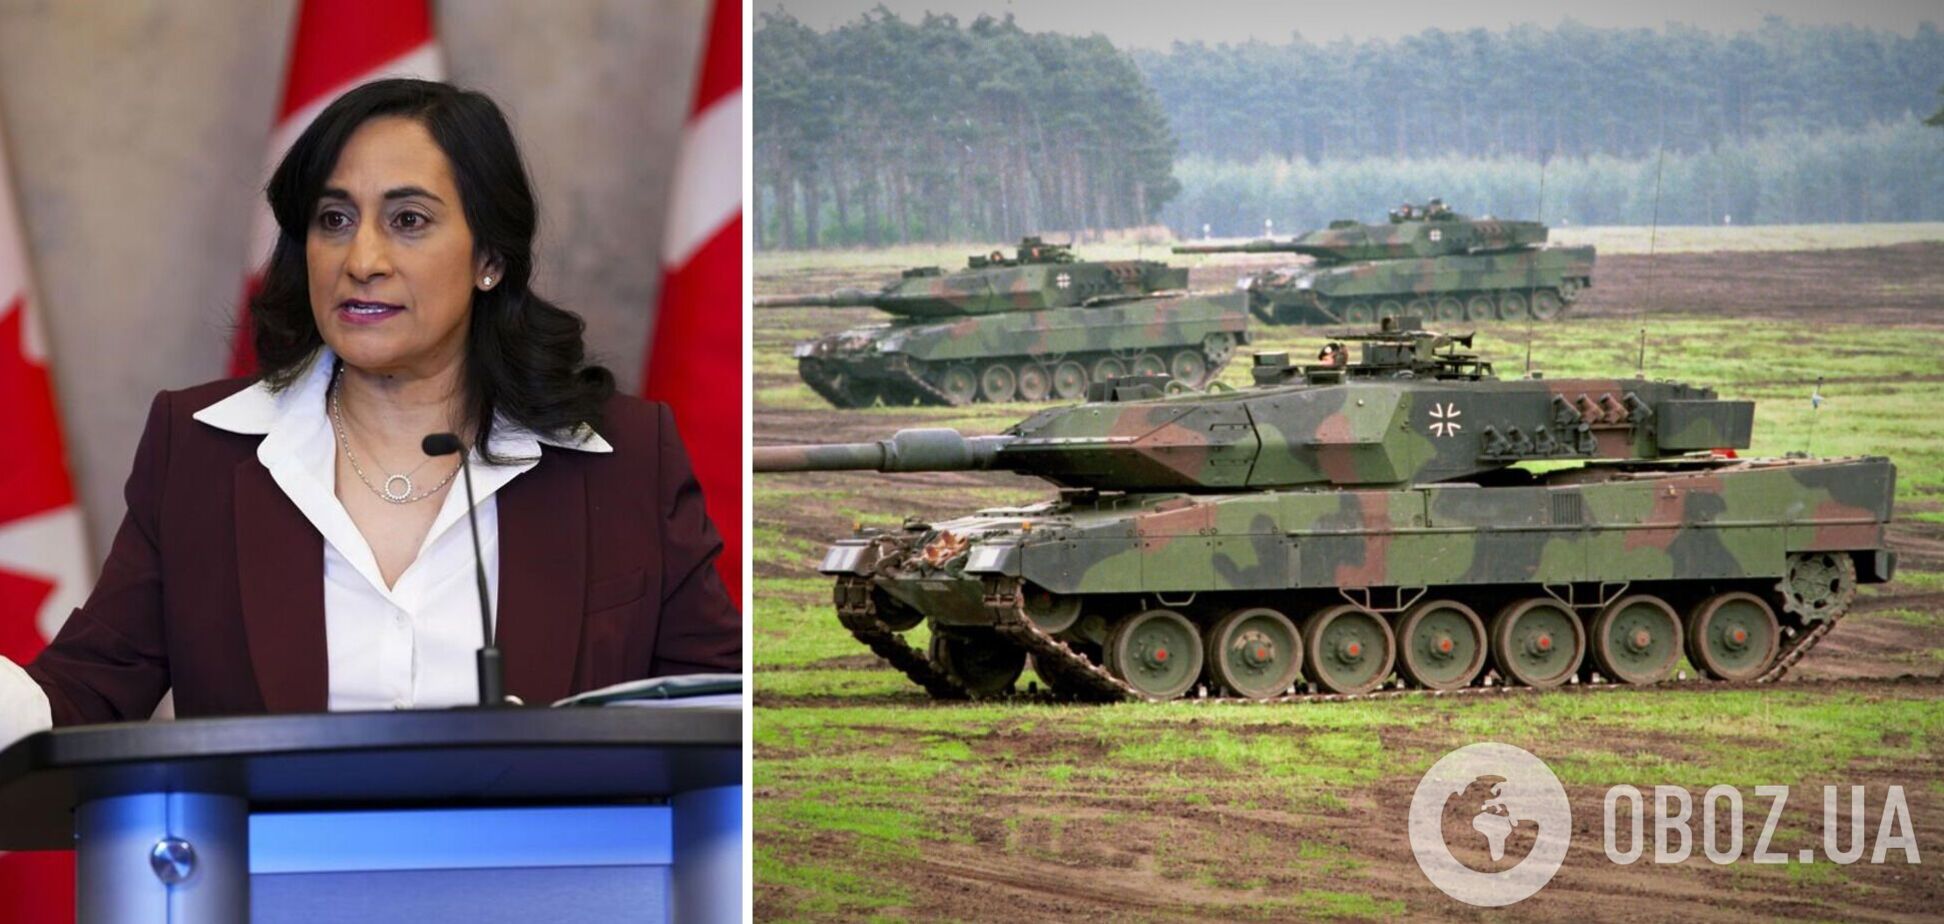 Канада передаст Украине четыре танка Leopard 2, — глава минобороны Ананд